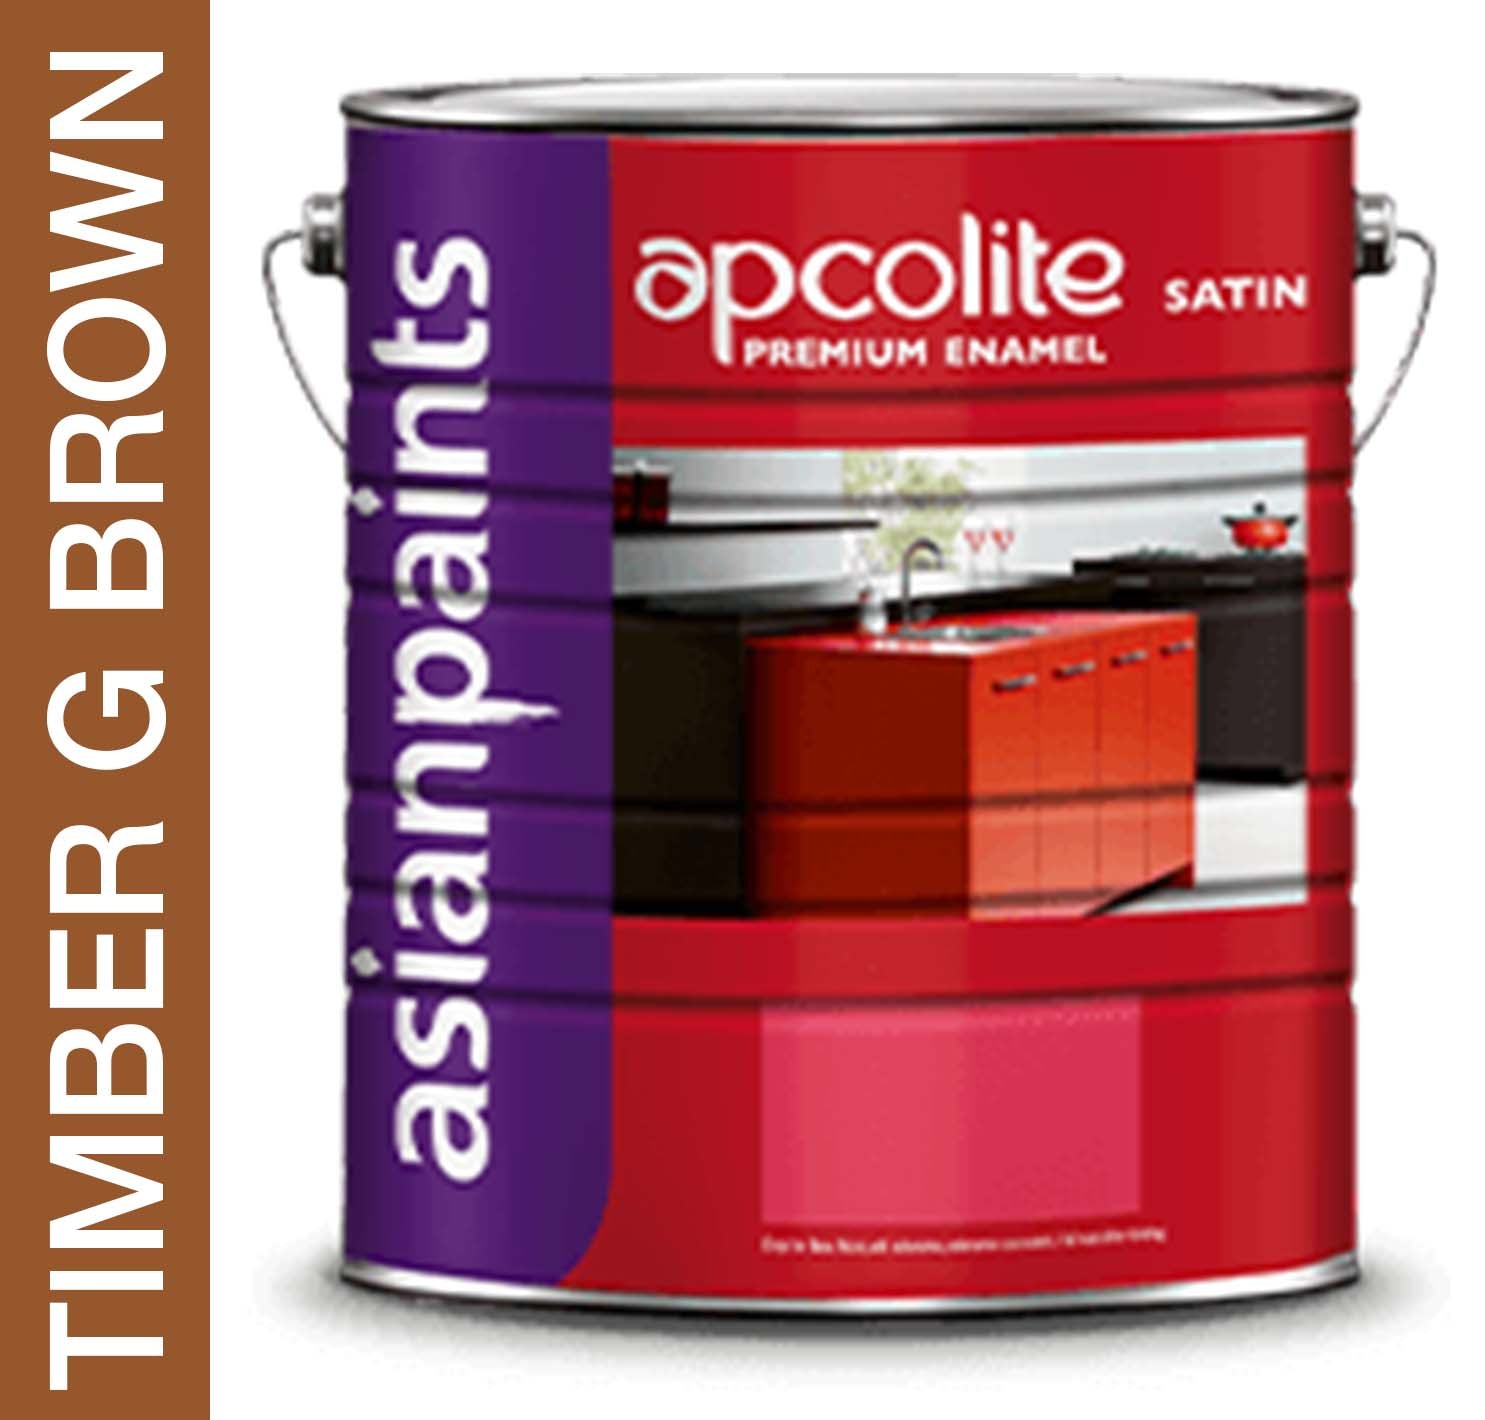 Asian Paints Apcolite Satin Premium Enamel - Timber Golden Brown